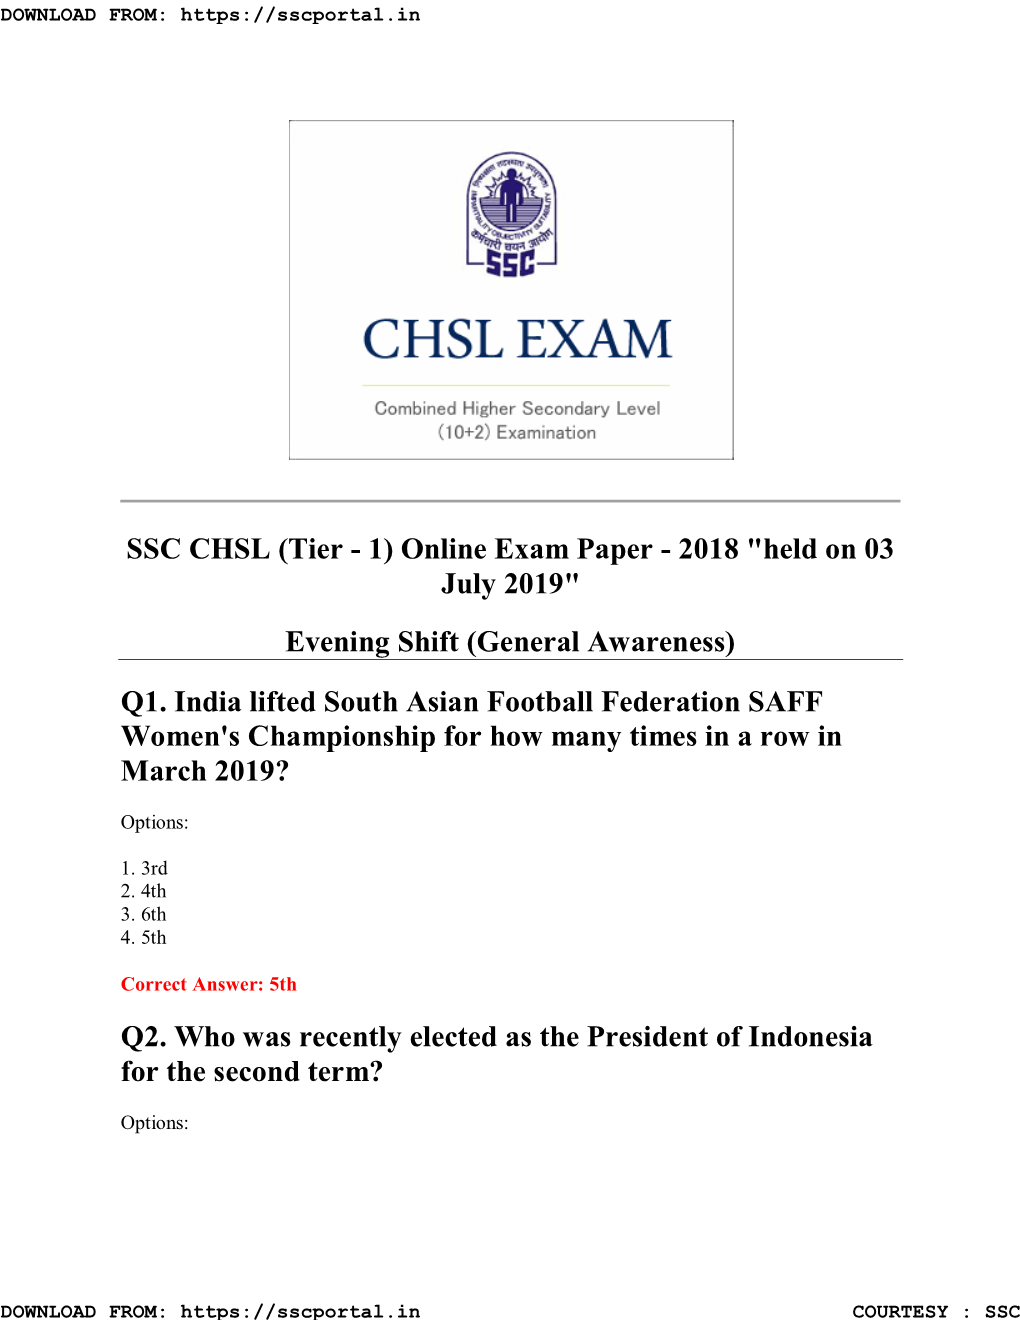 SSC CHSL (Tier - 1) Online Exam Paper - 2018 "Held on 03 July 2019" Evening Shift (General Awareness) Q1